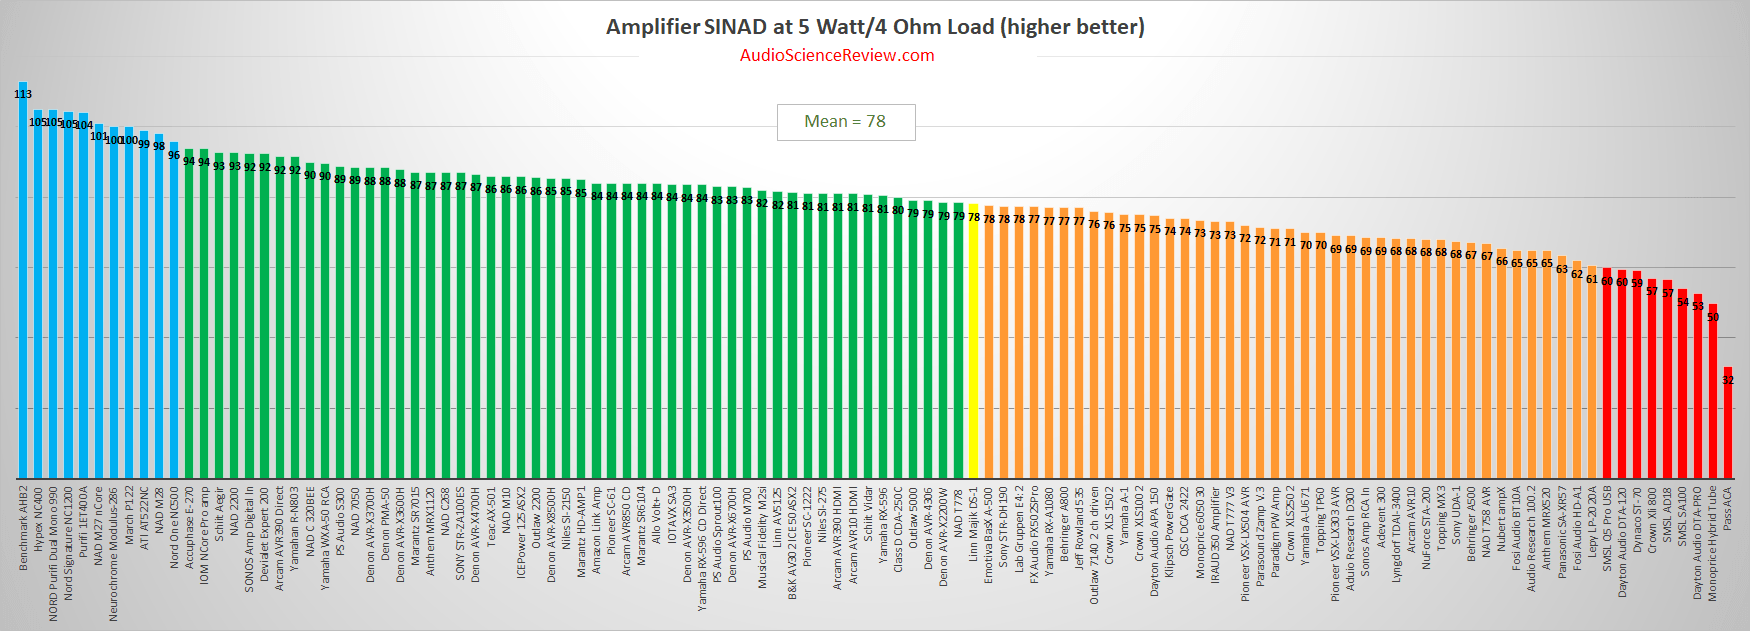 Best streamer amplifier 2020 review.png